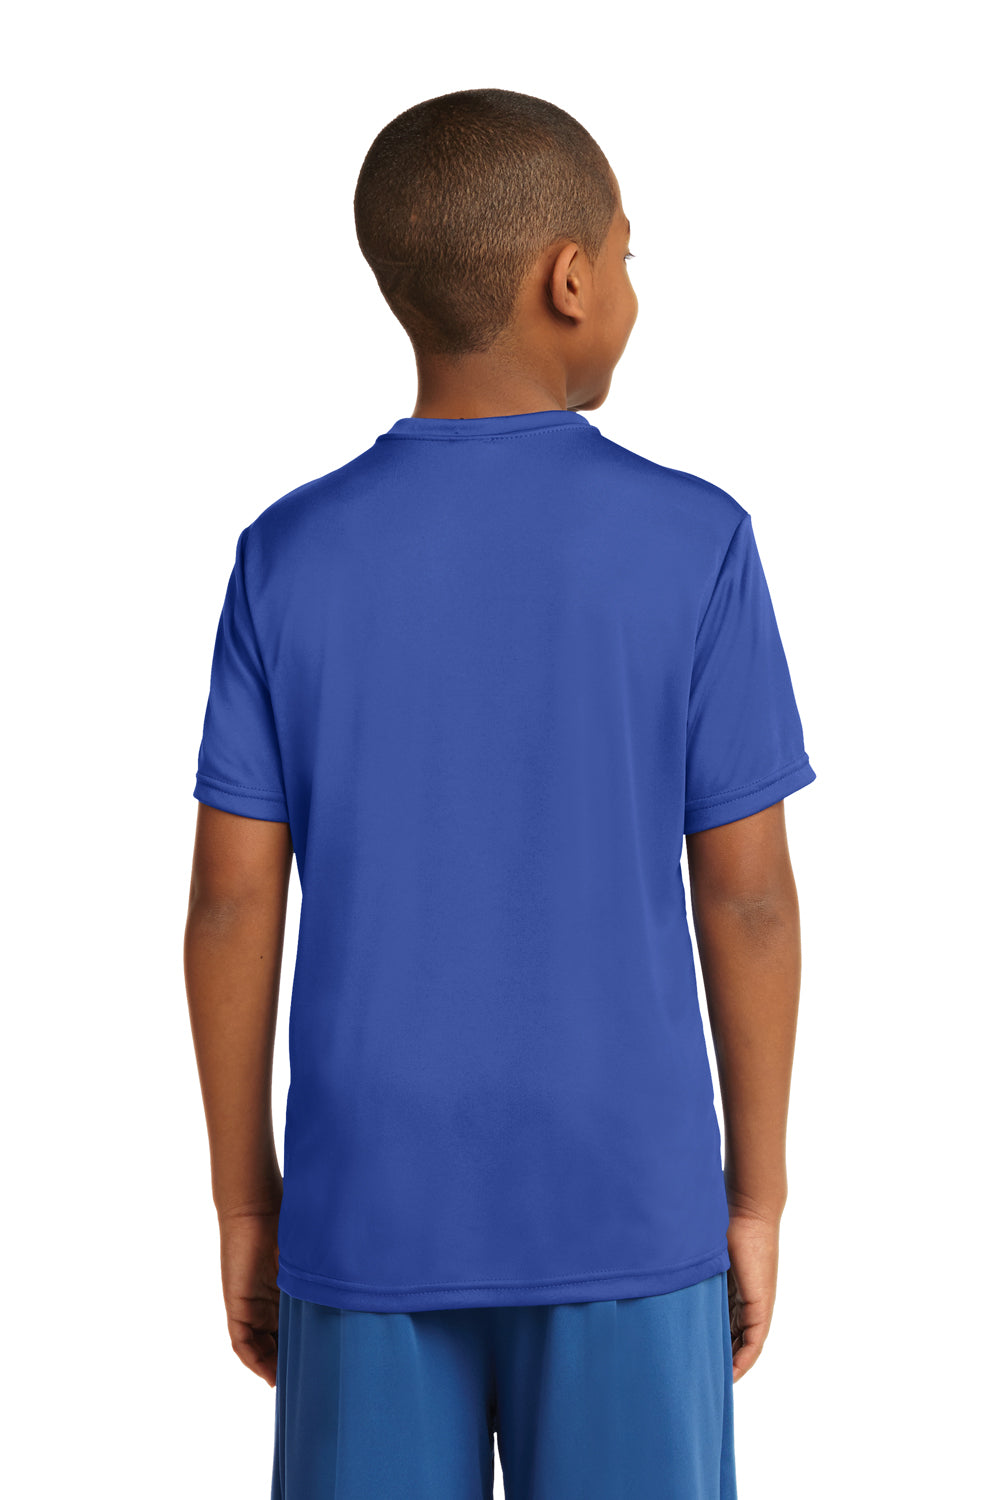 Sport-Tek YST350 Youth Competitor Moisture Wicking Short Sleeve Crewneck T-Shirt Royal Blue Back